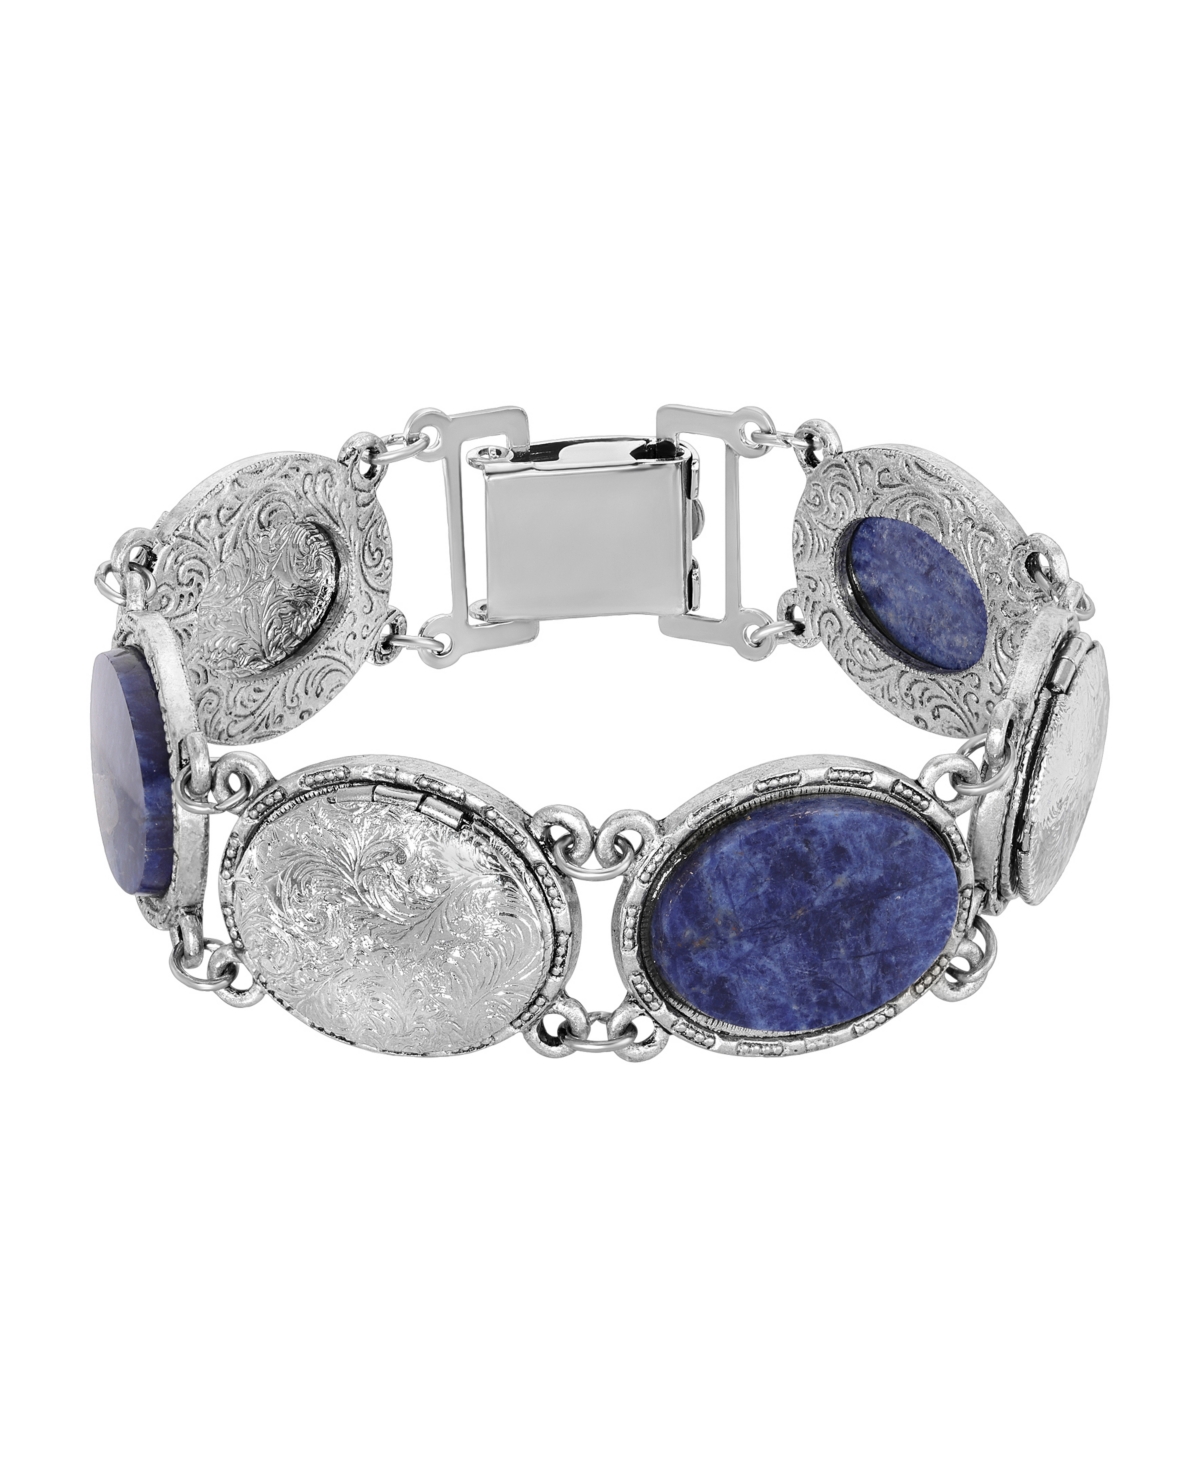 Silver-Tone Oval Blue Semi Precious with Lockets Link Bracelet - Blue